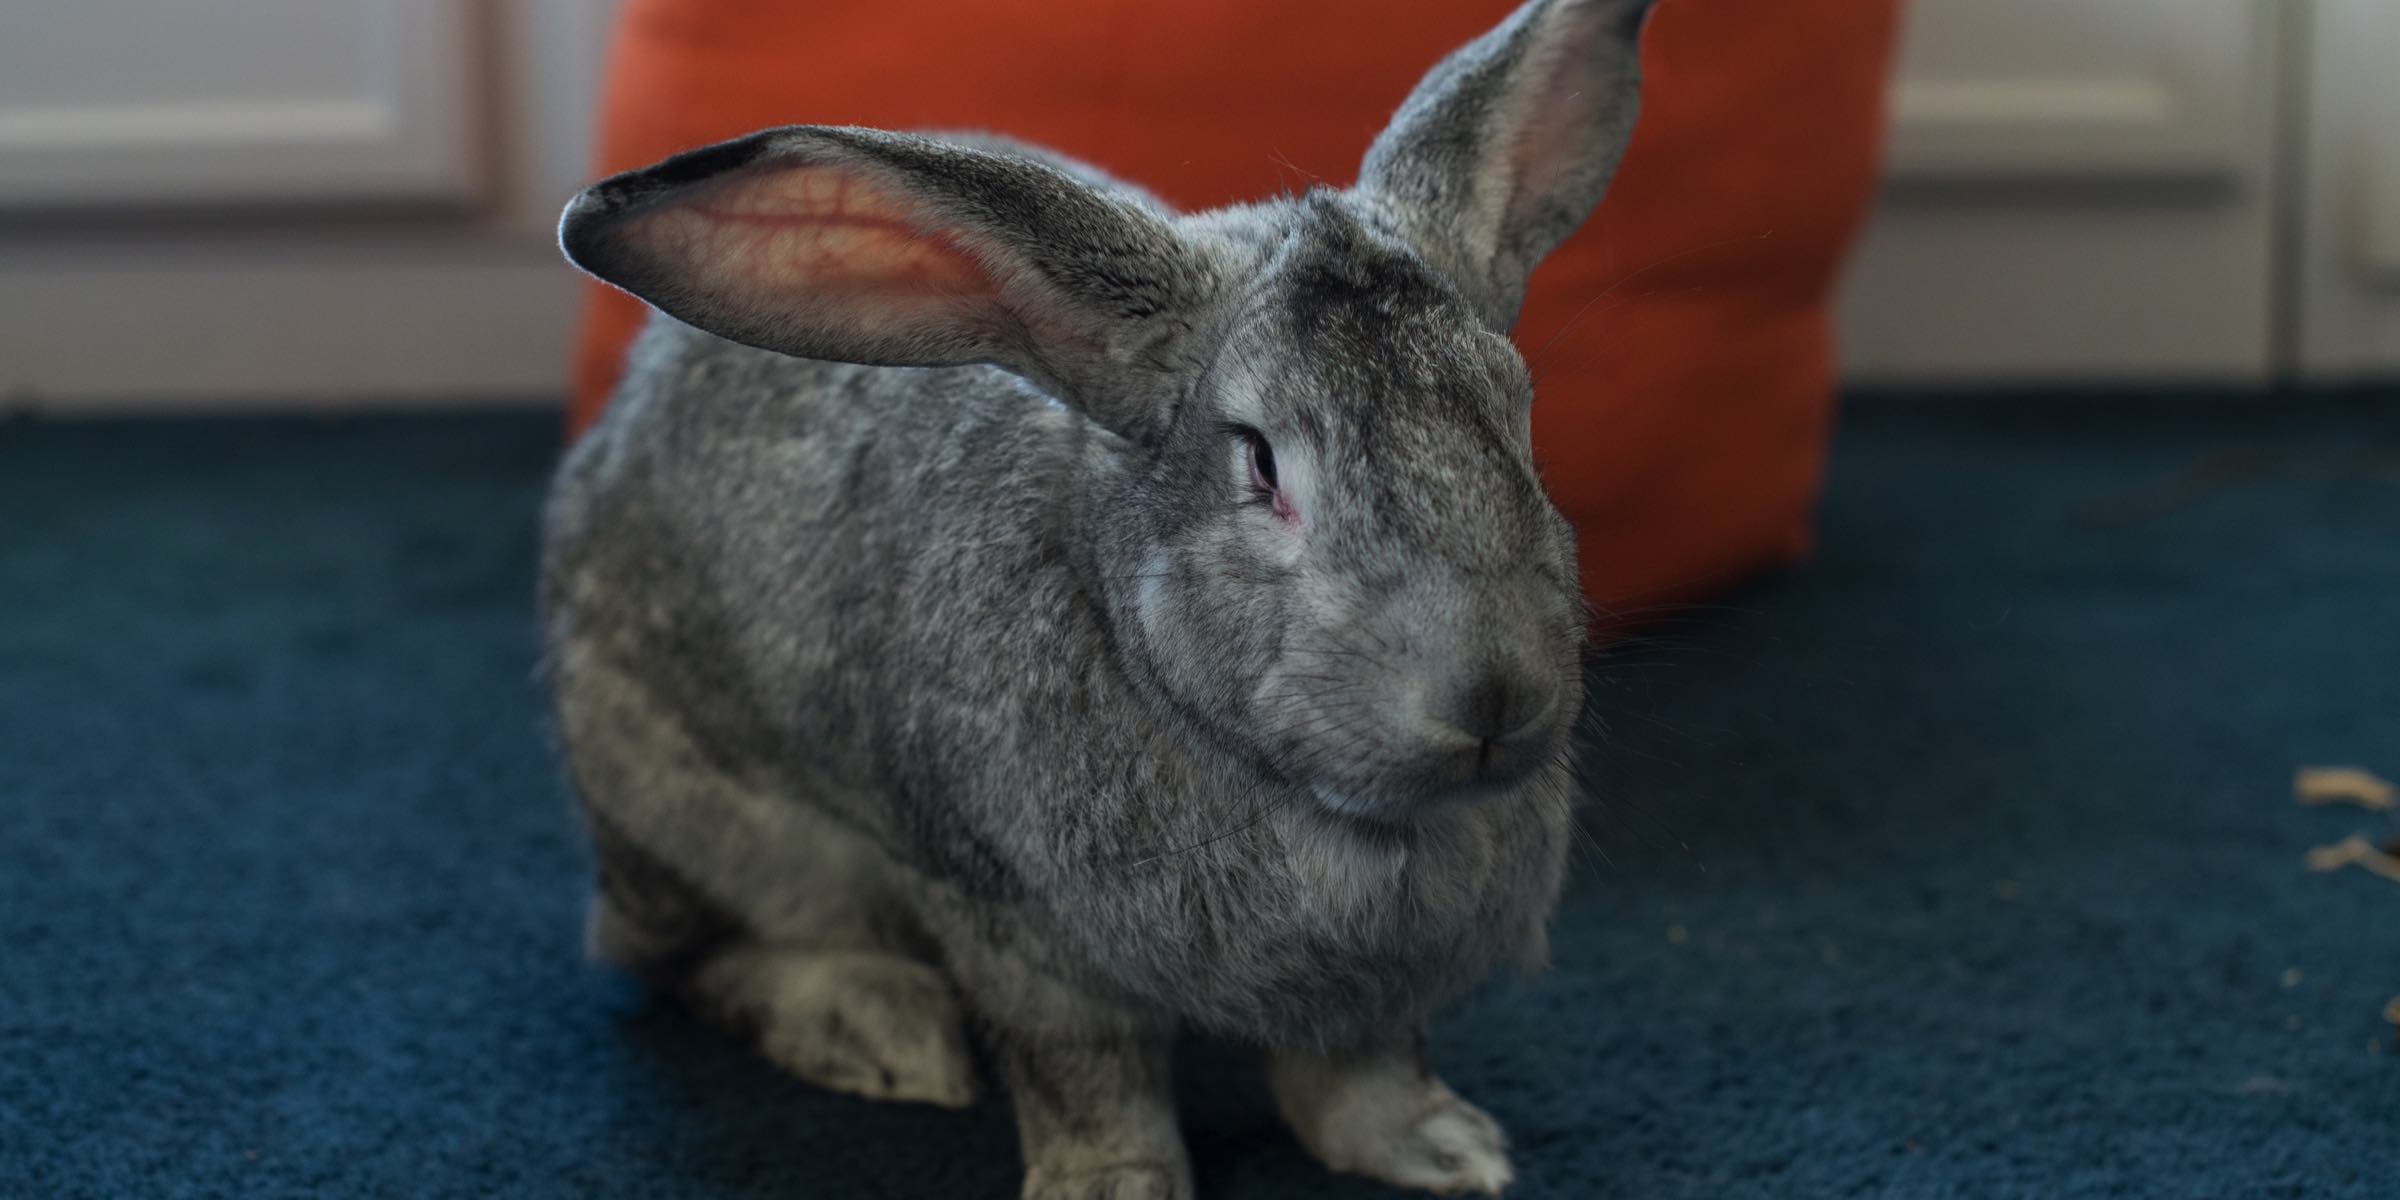 giant bunnies for adoption